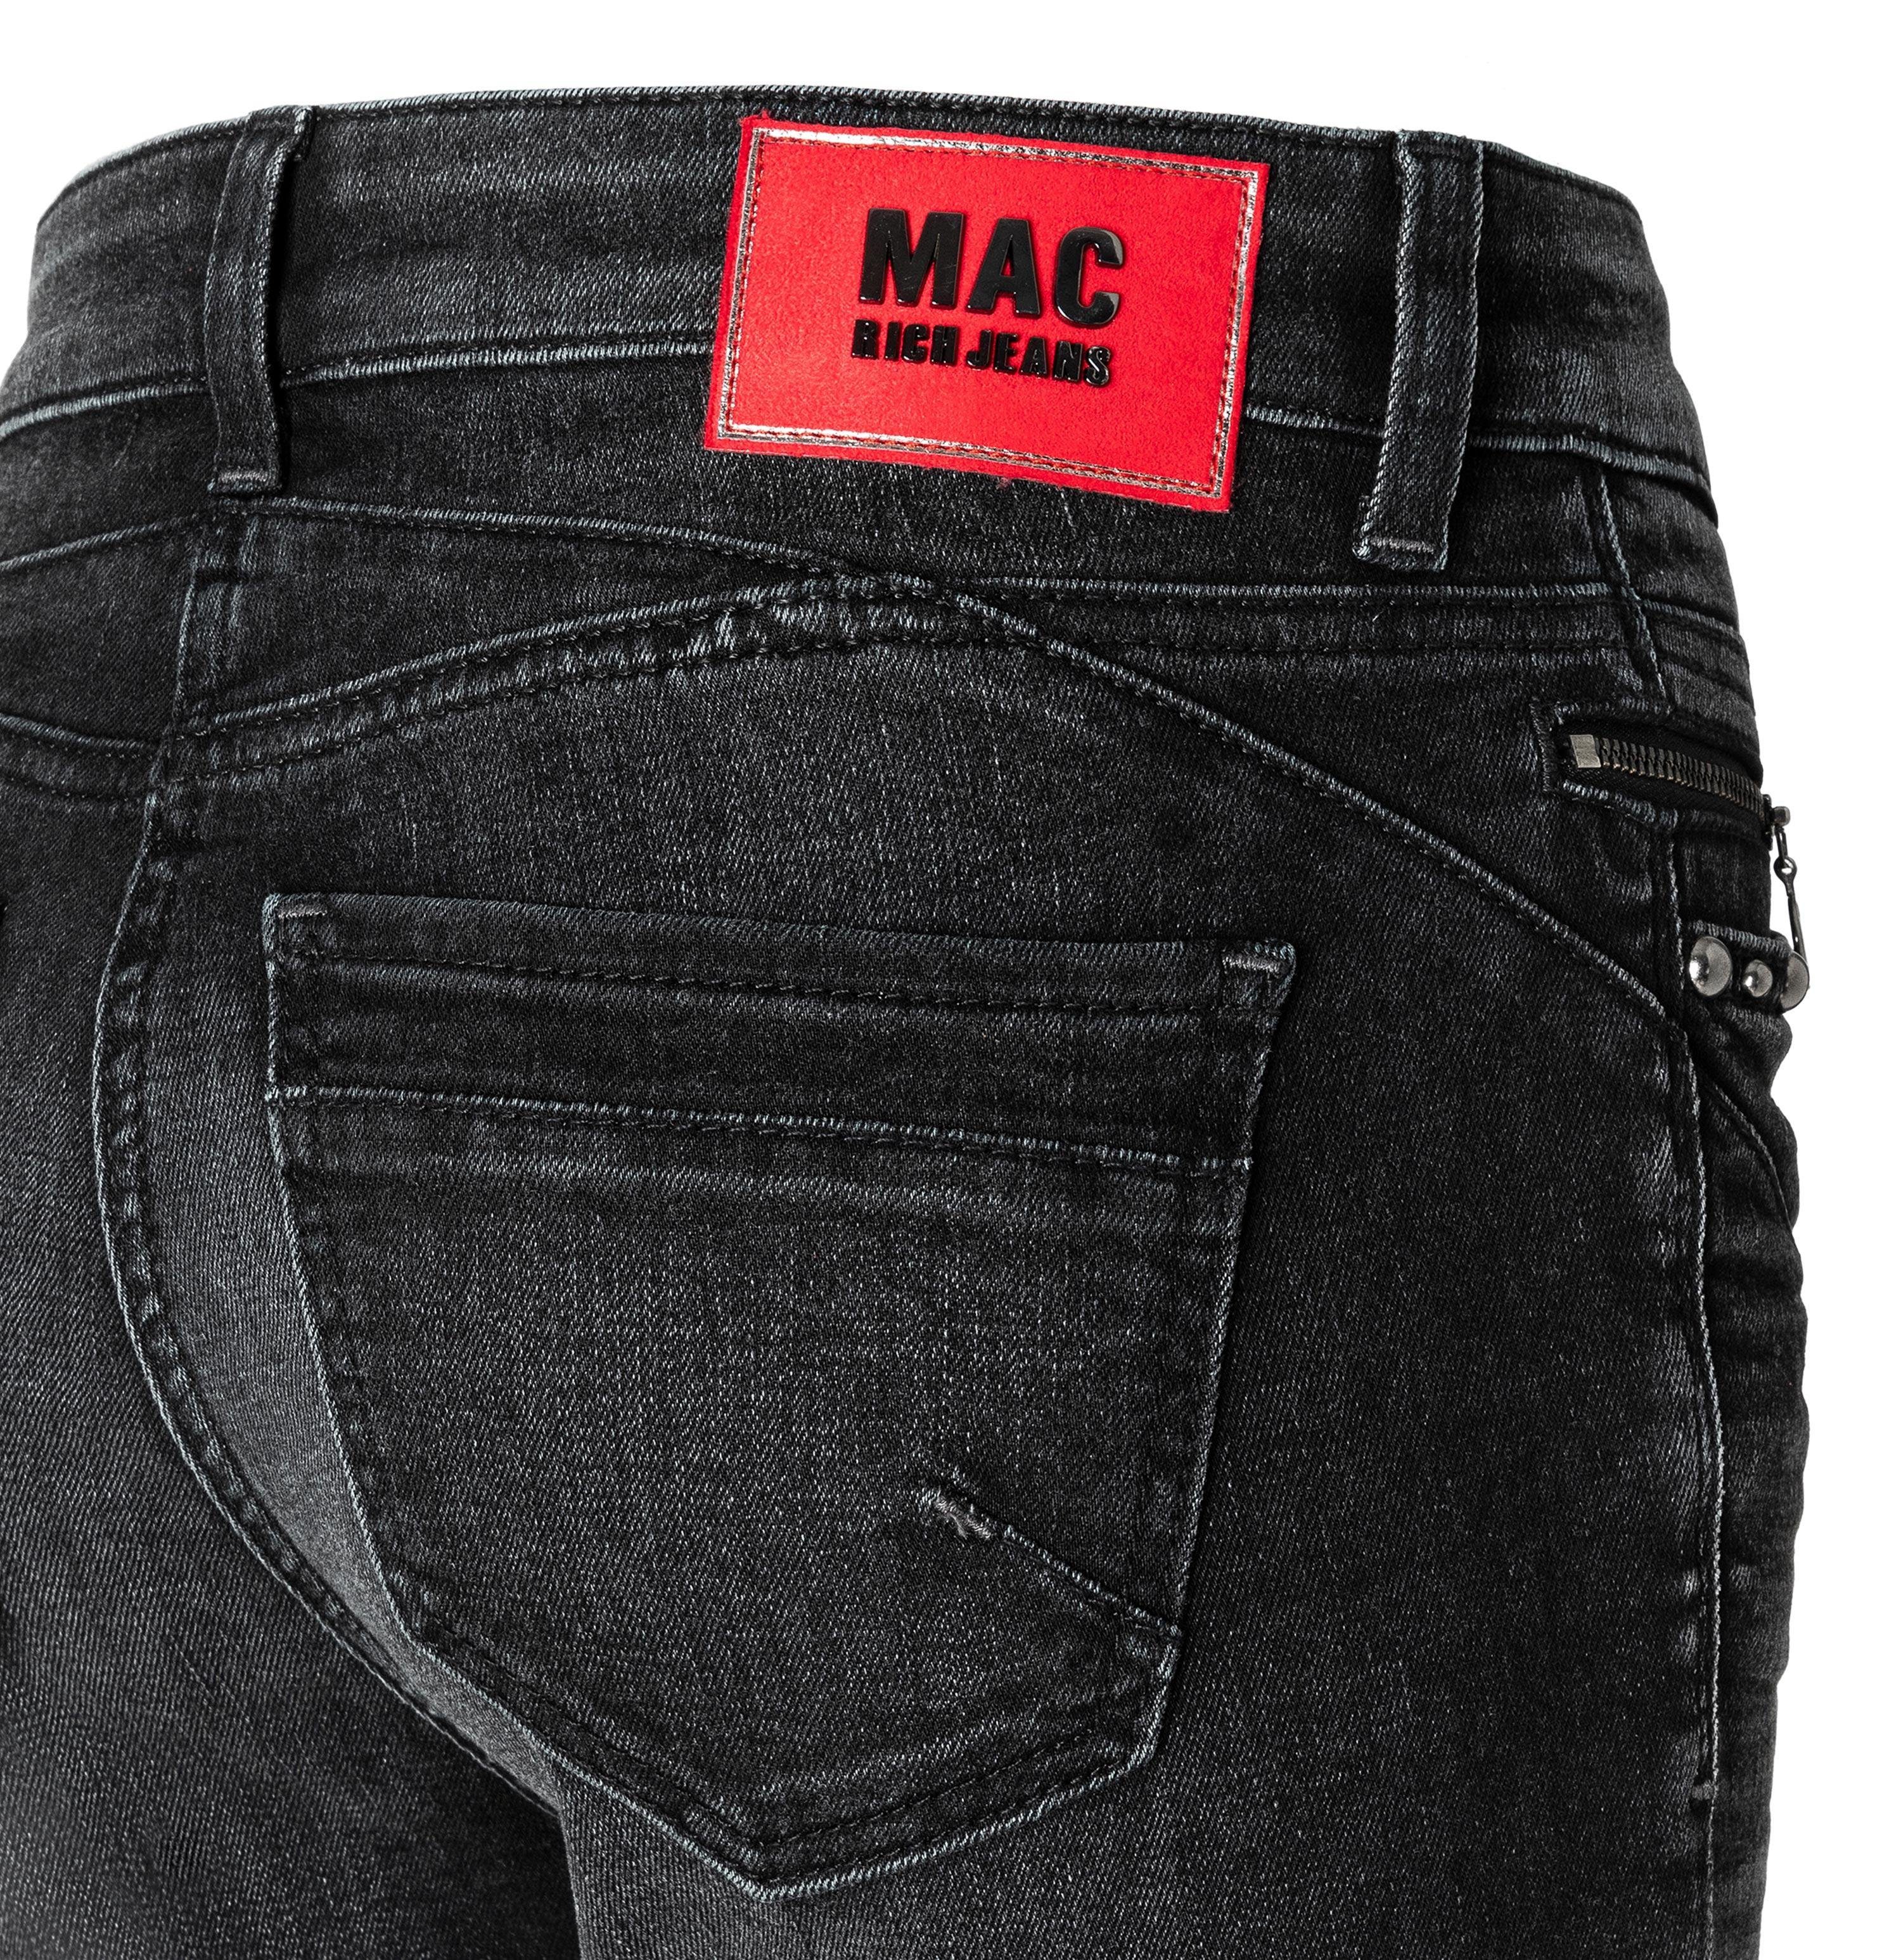 MAC Stretch-Jeans MAC D976 RICH dark 5749-91-0389 wash SLIM night